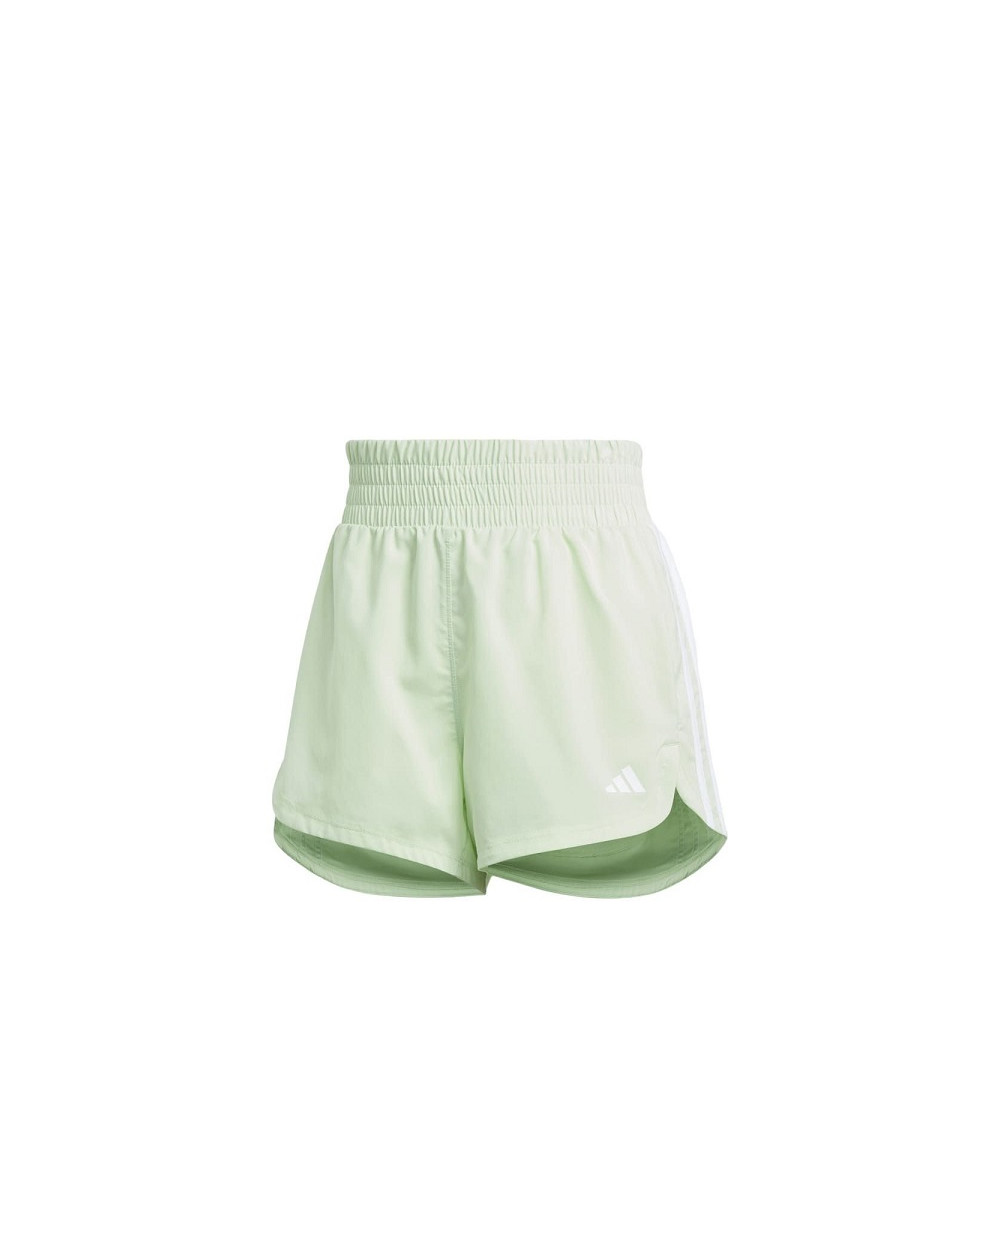 Pantaloncino adidas donna verde menta it7763